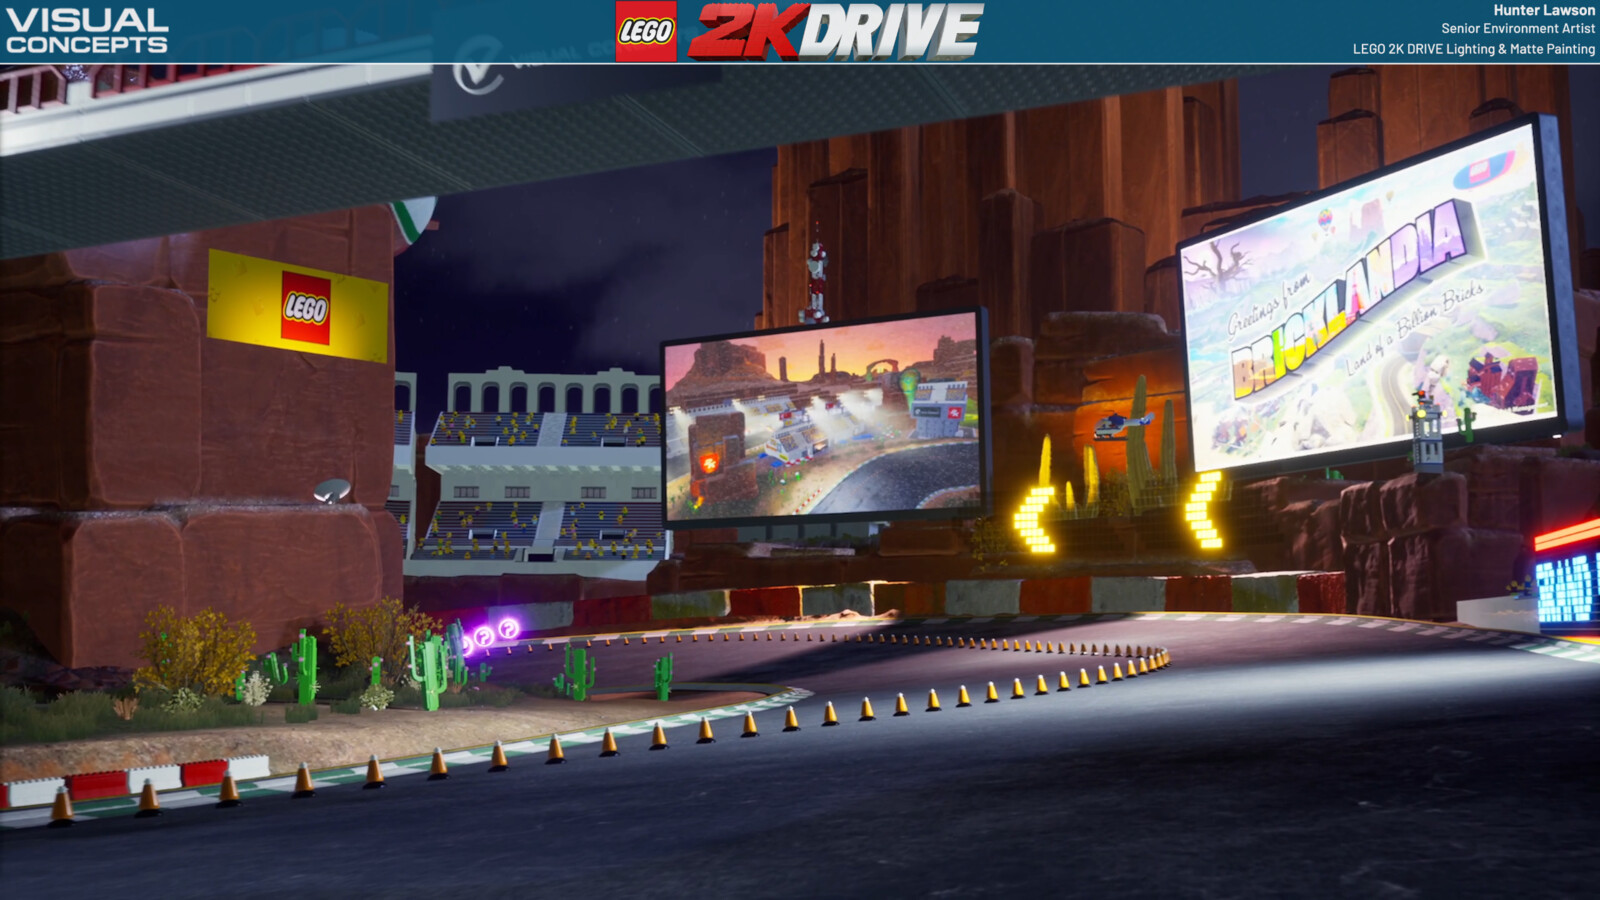 | | LEGO 2K DRIVE | Big Buttes Grand Brick Arena | Race Lighting | |